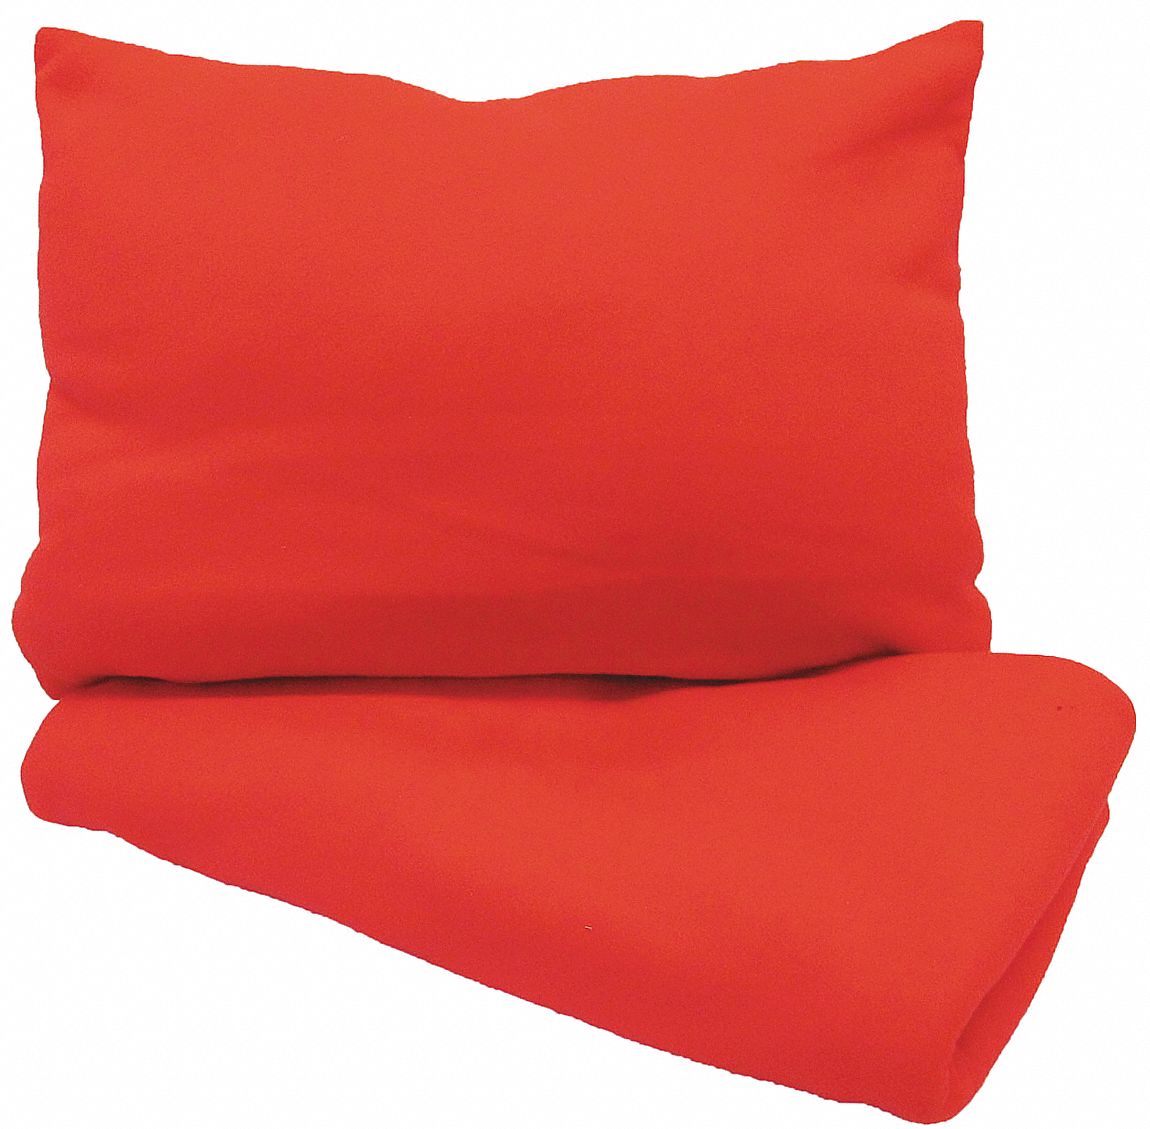 4VNG9 - Emergency Blanket  Pillow Pack